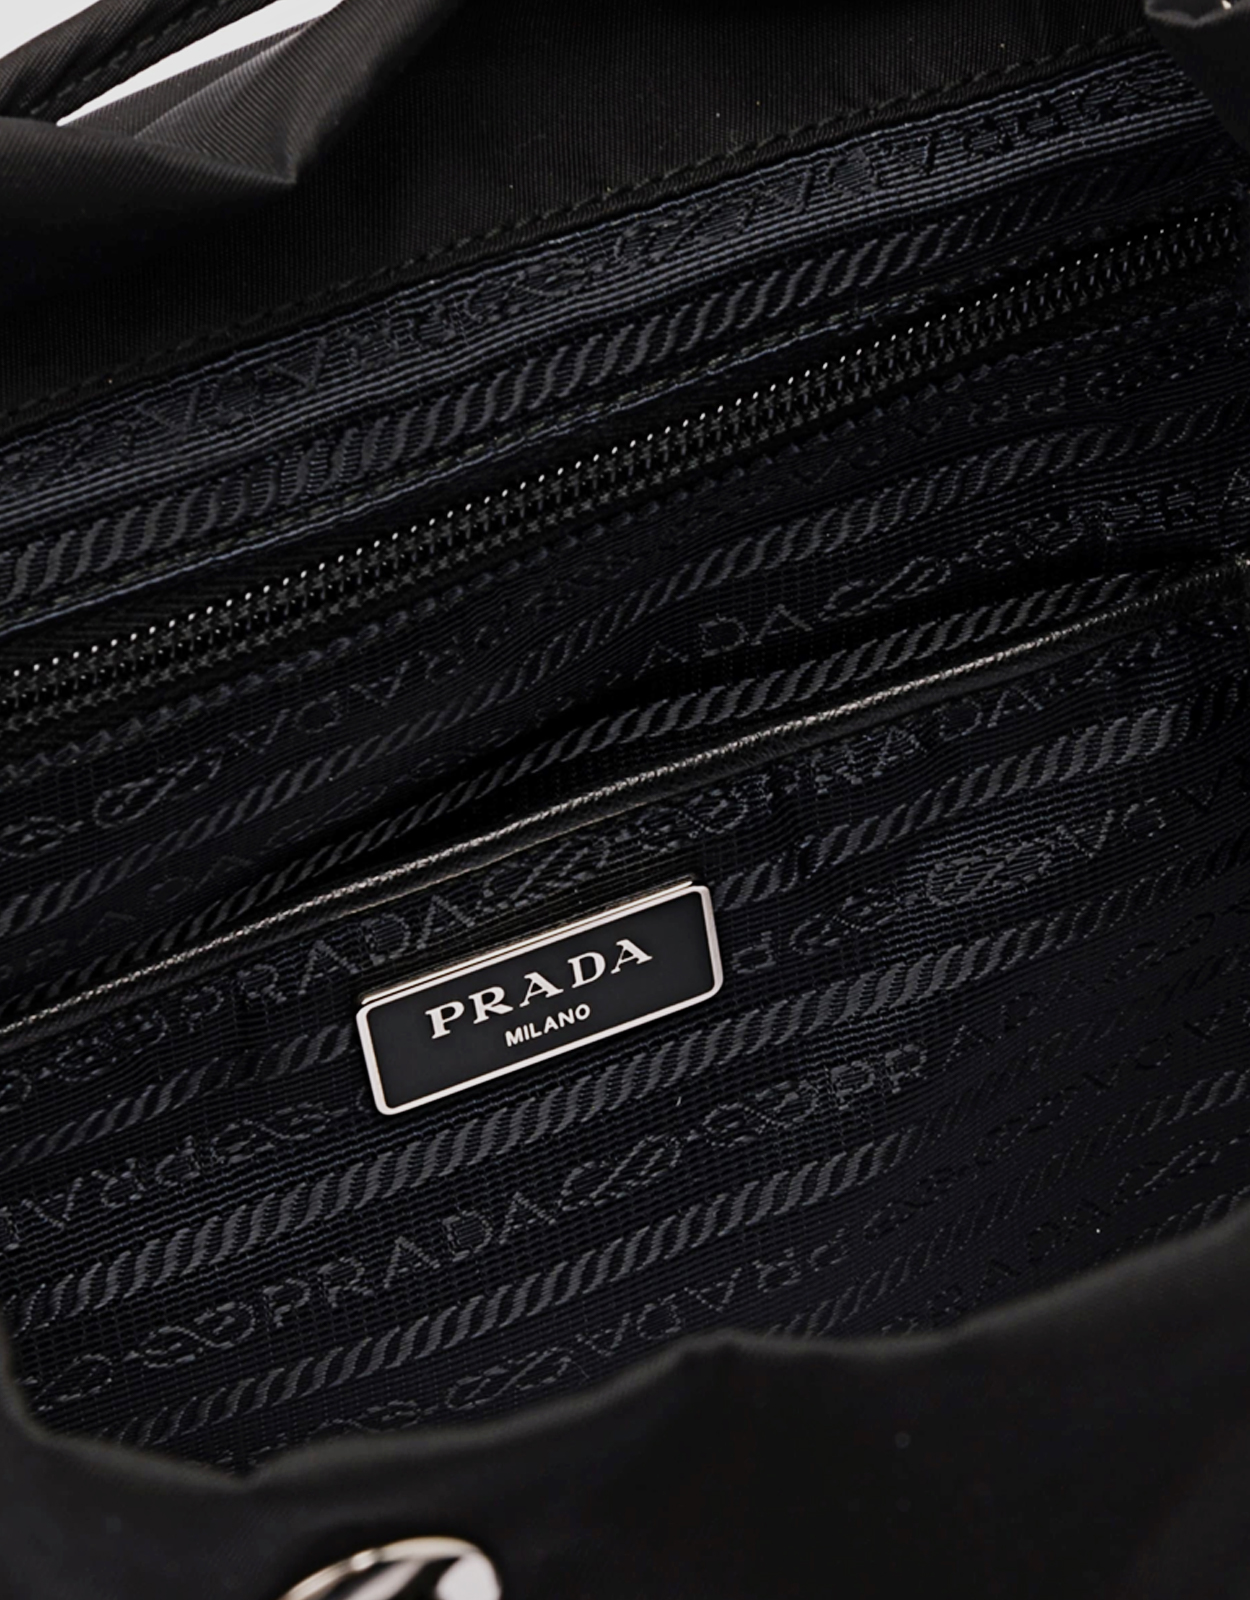 Prada to launch recycled nylon bags